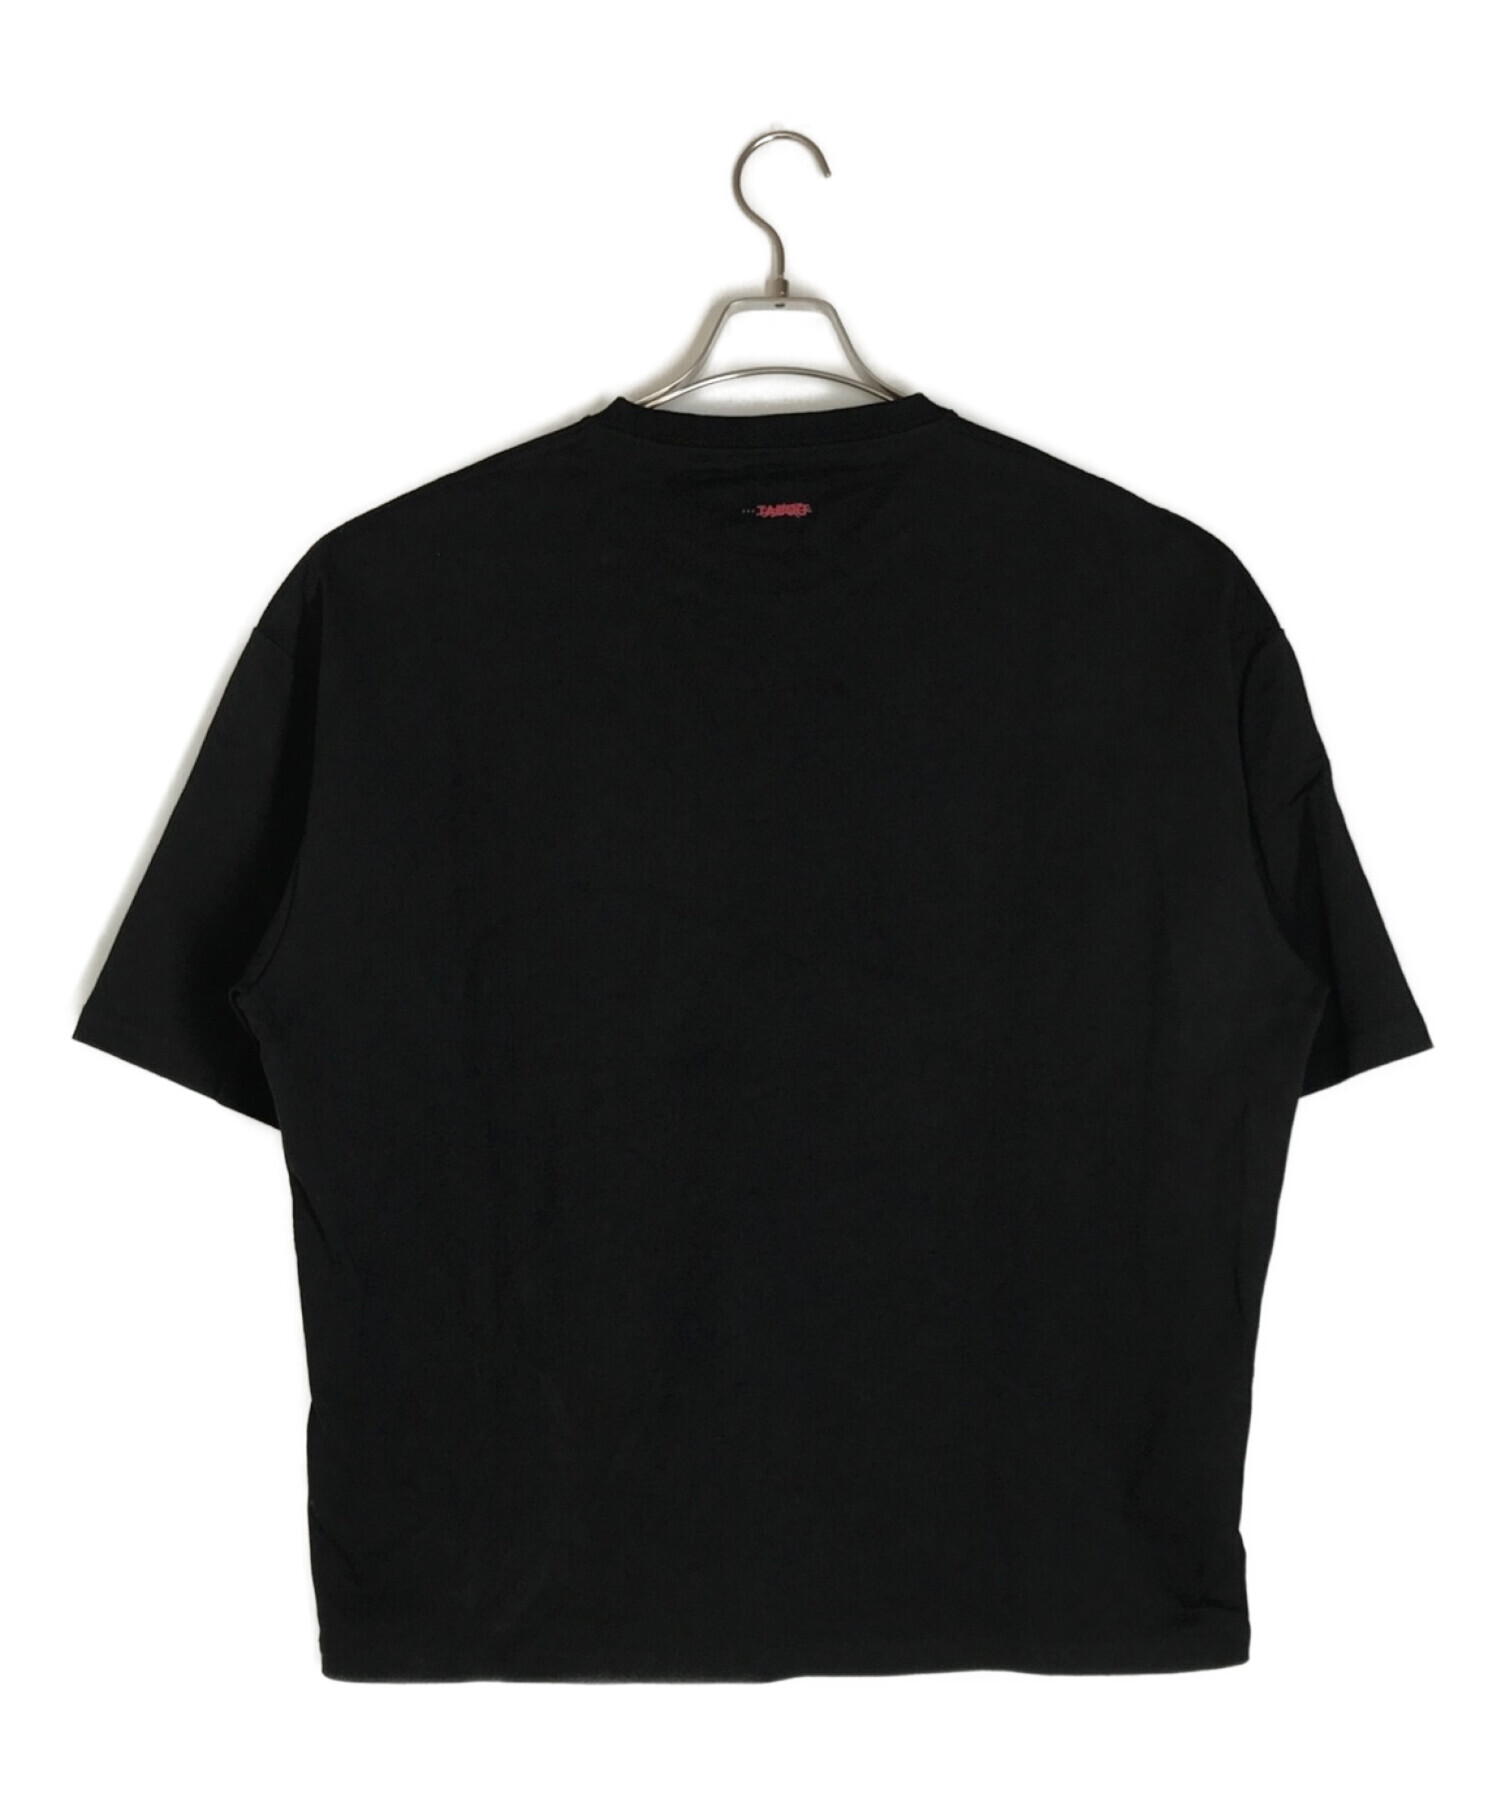 genzai (ゲンザイ) Tシャツ ブラック サイズ:XL